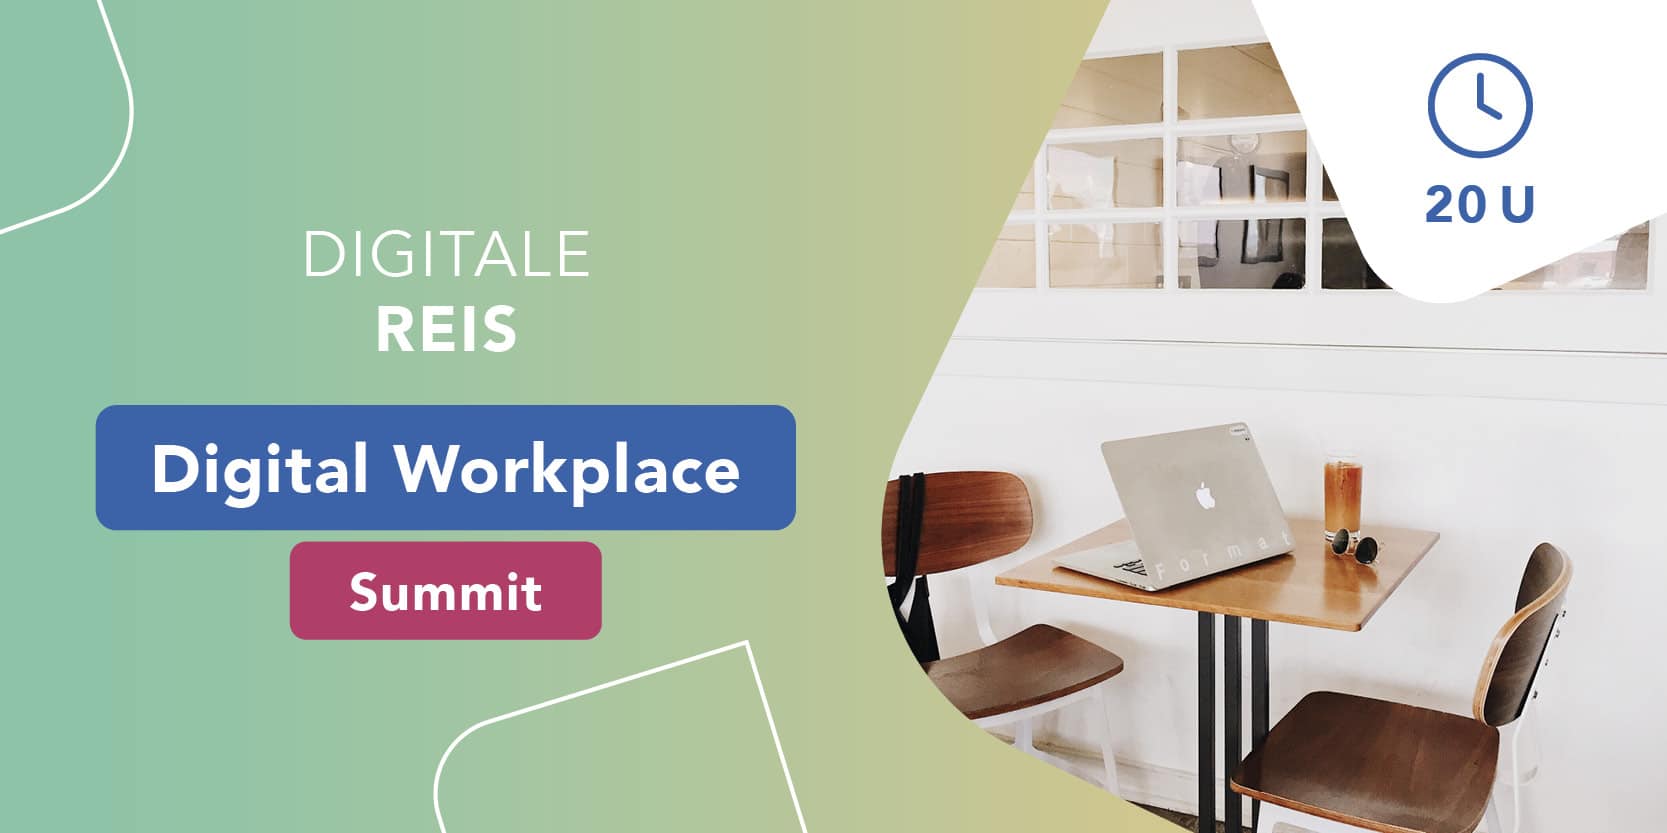 Digital Workplace (Summit)